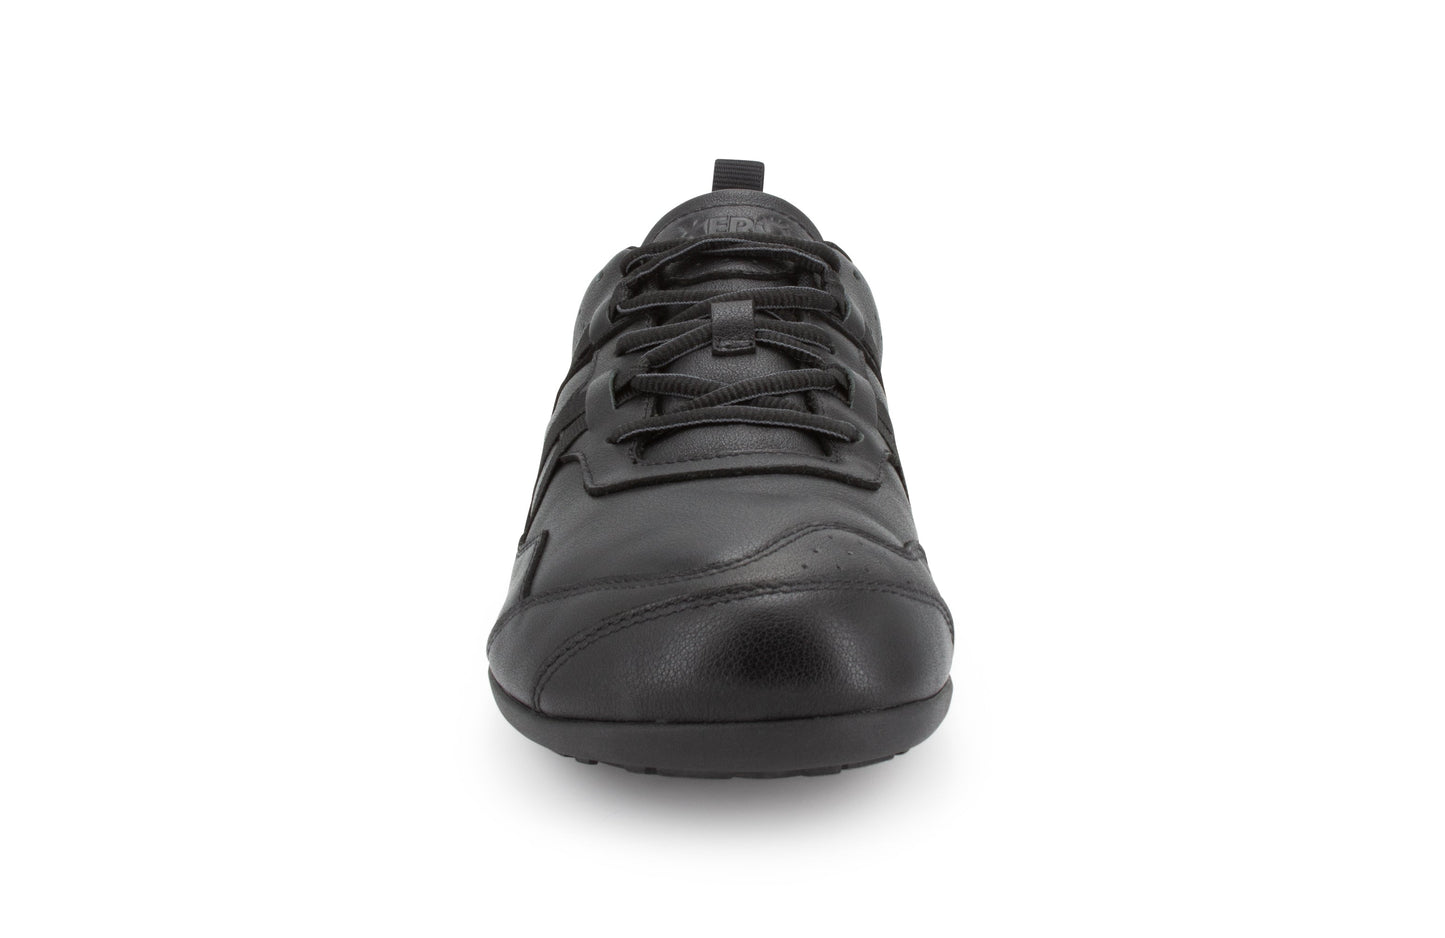 Xero Shoes Prio All-Day SR Womens barfods arbejdssko til kvinder i farven black, forfra